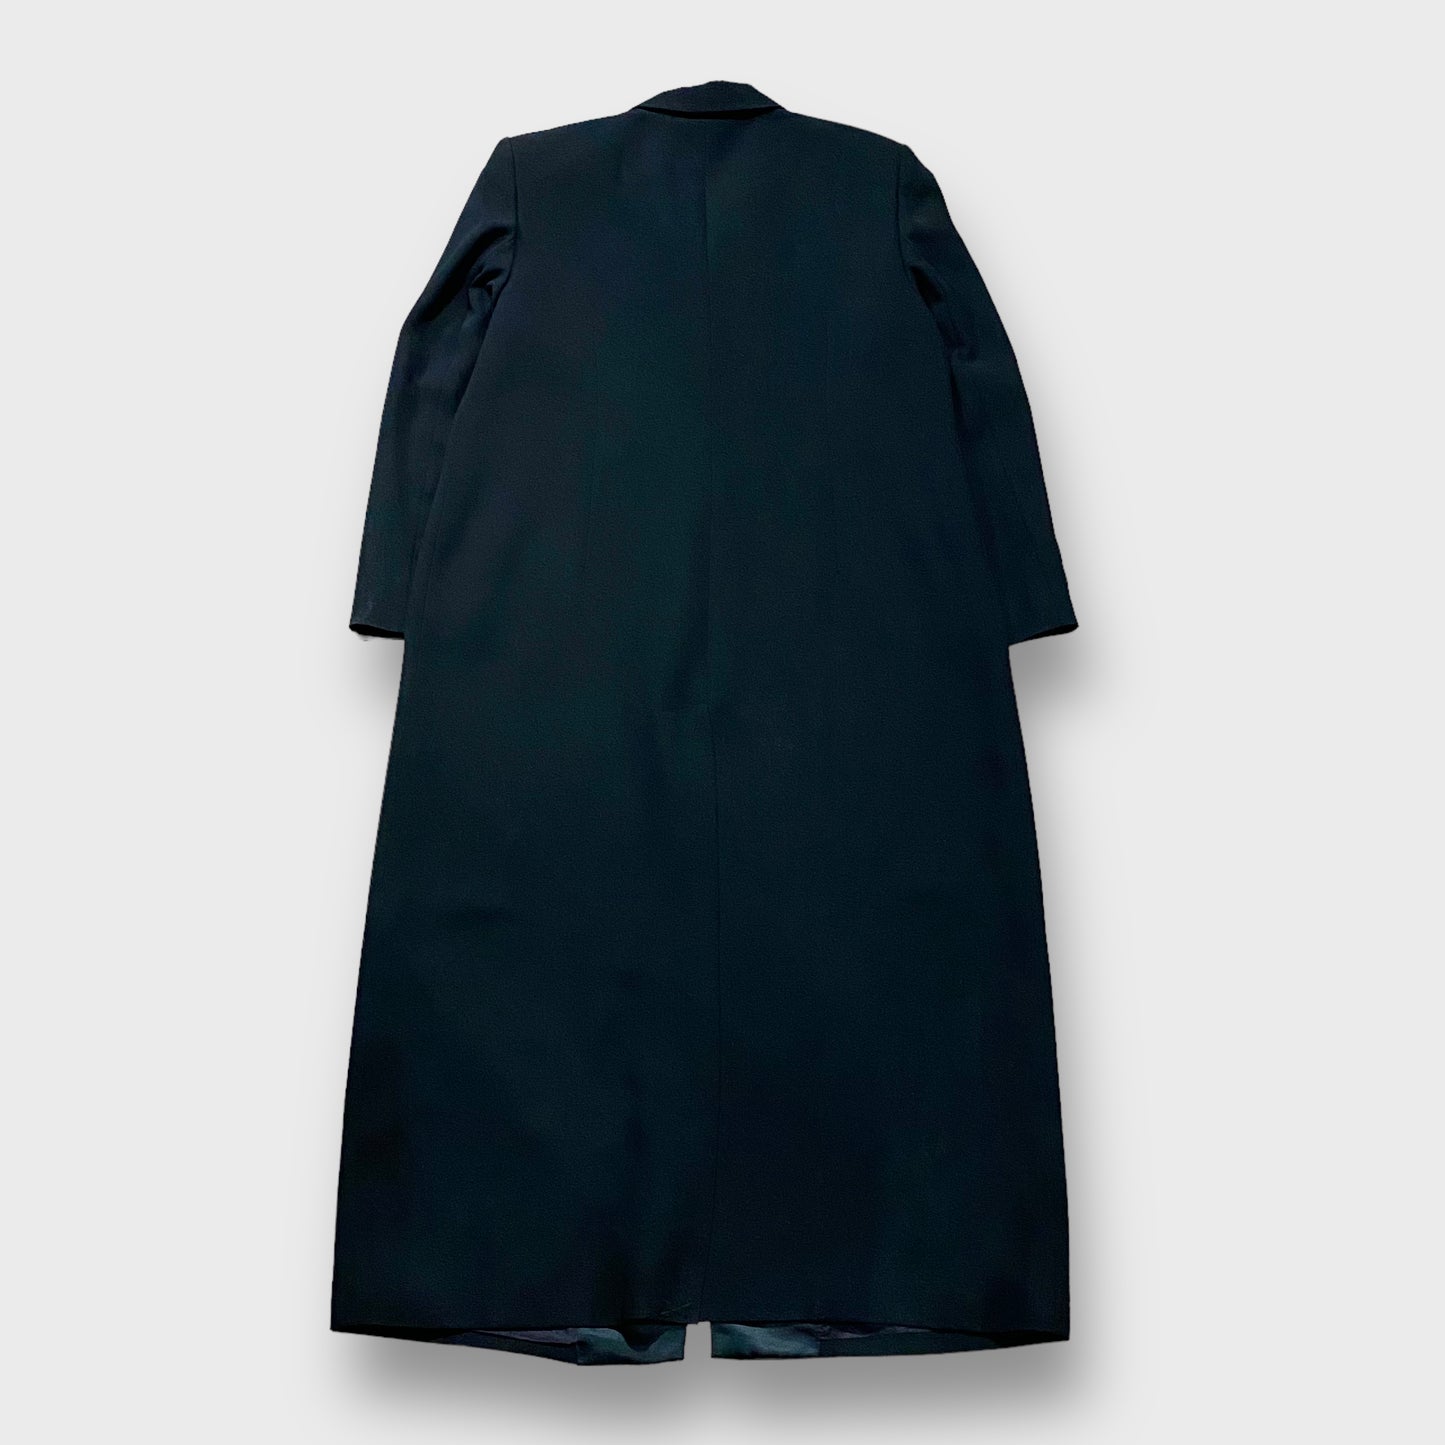 Tailored type long coat